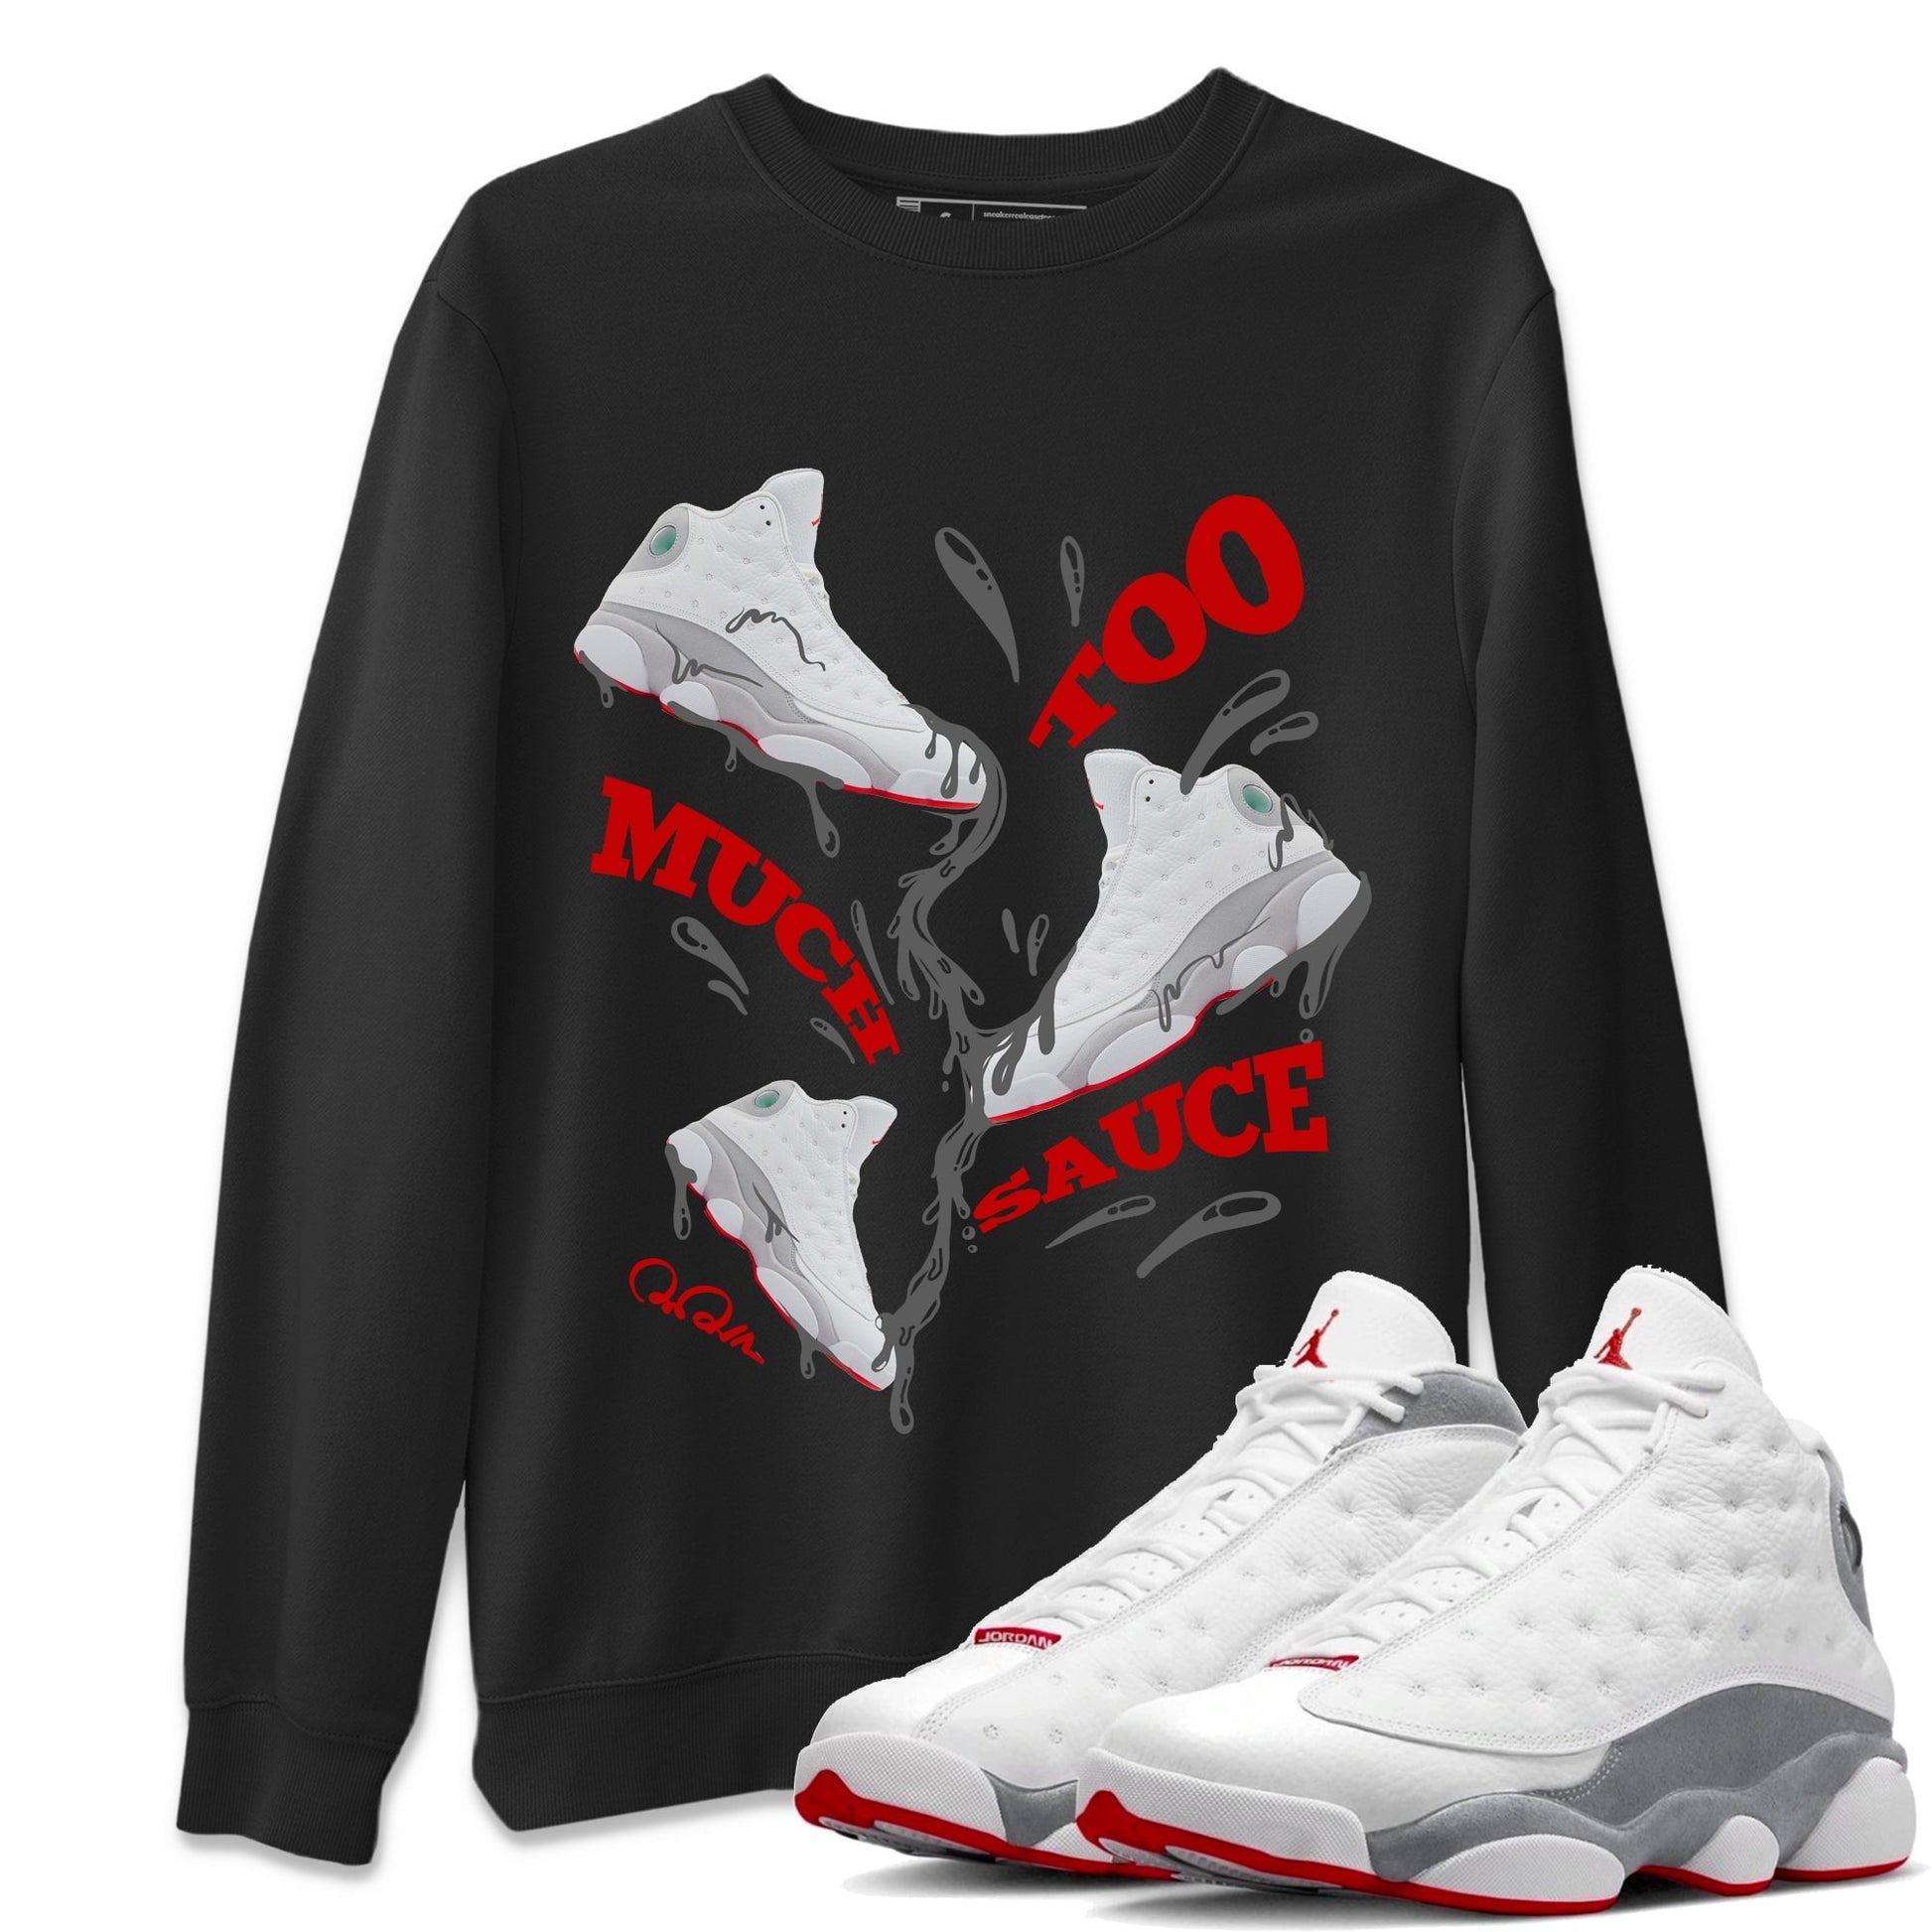 Air Jordan 13 Wolf Grey Sneaker Match Tees Too Much Sauce Sneaker Tees AJ13 Wolf Grey Sneaker Release Tees Unisex Shirts Black 1